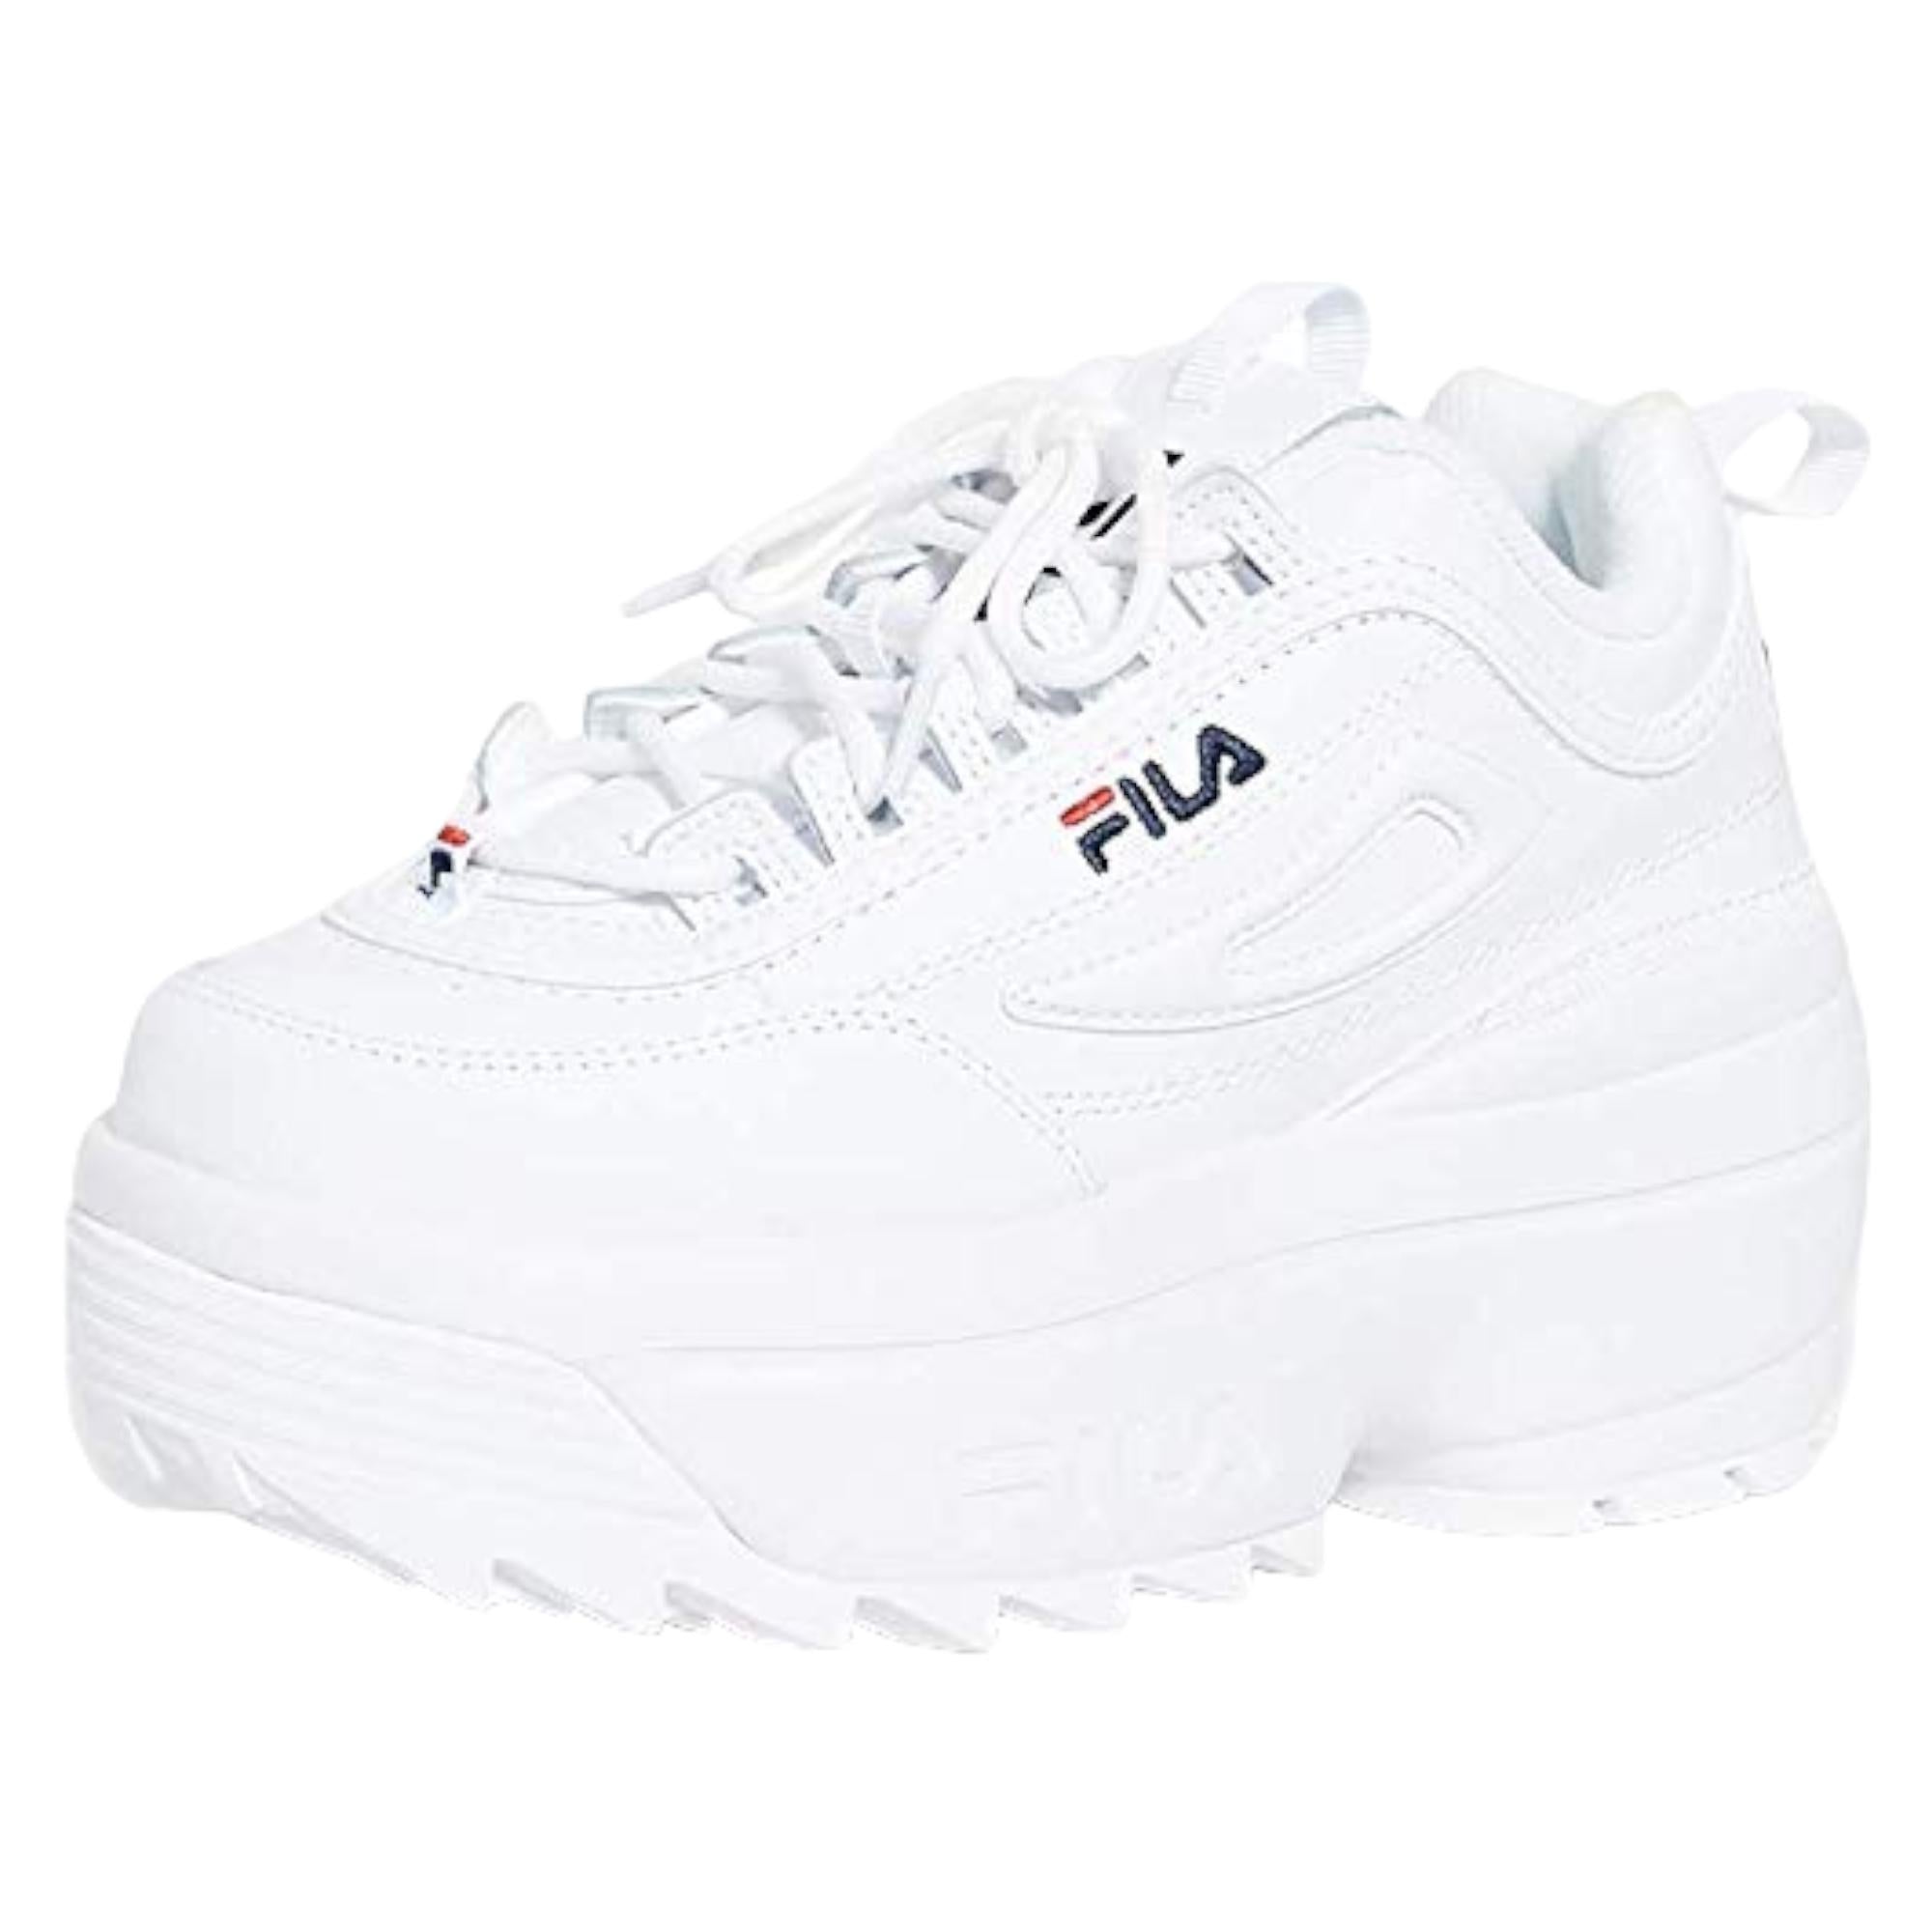 Fila Women Disruptor II Wedge Shoes White/Navy/Red-Nexus Clothing